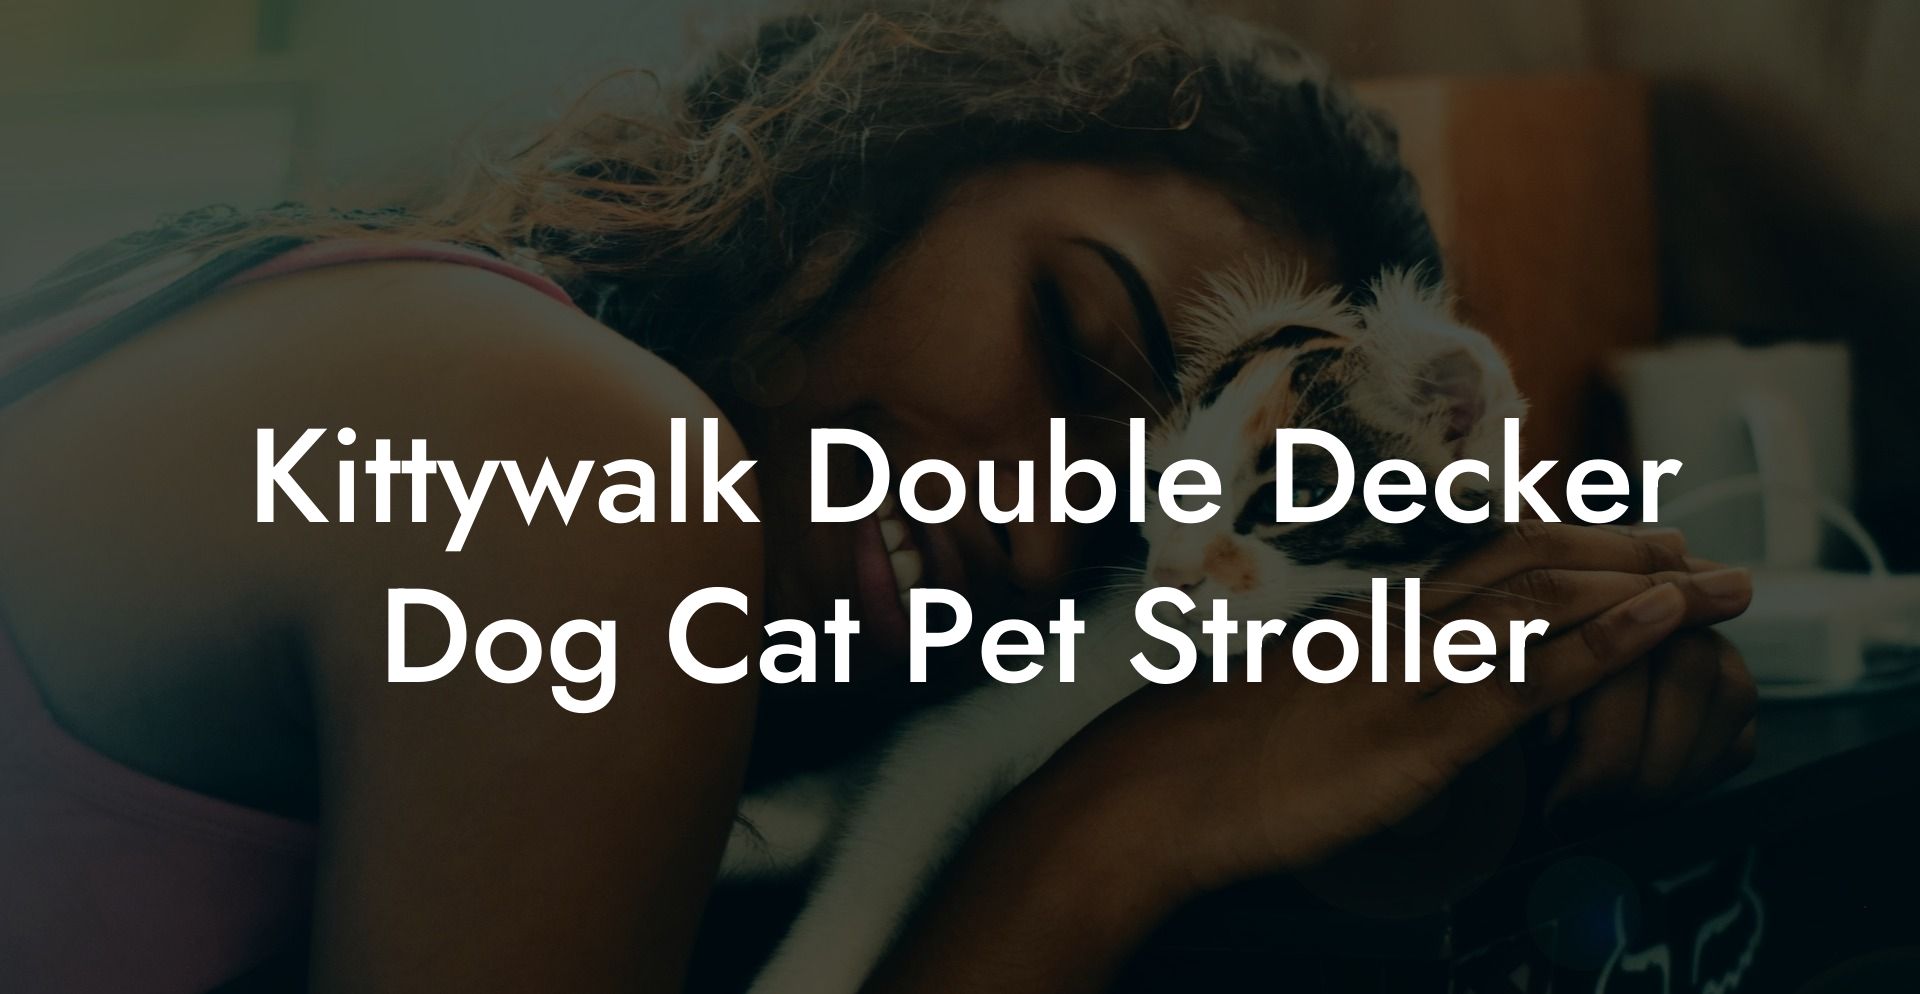 Kittywalk Double Decker Dog Cat Pet Stroller